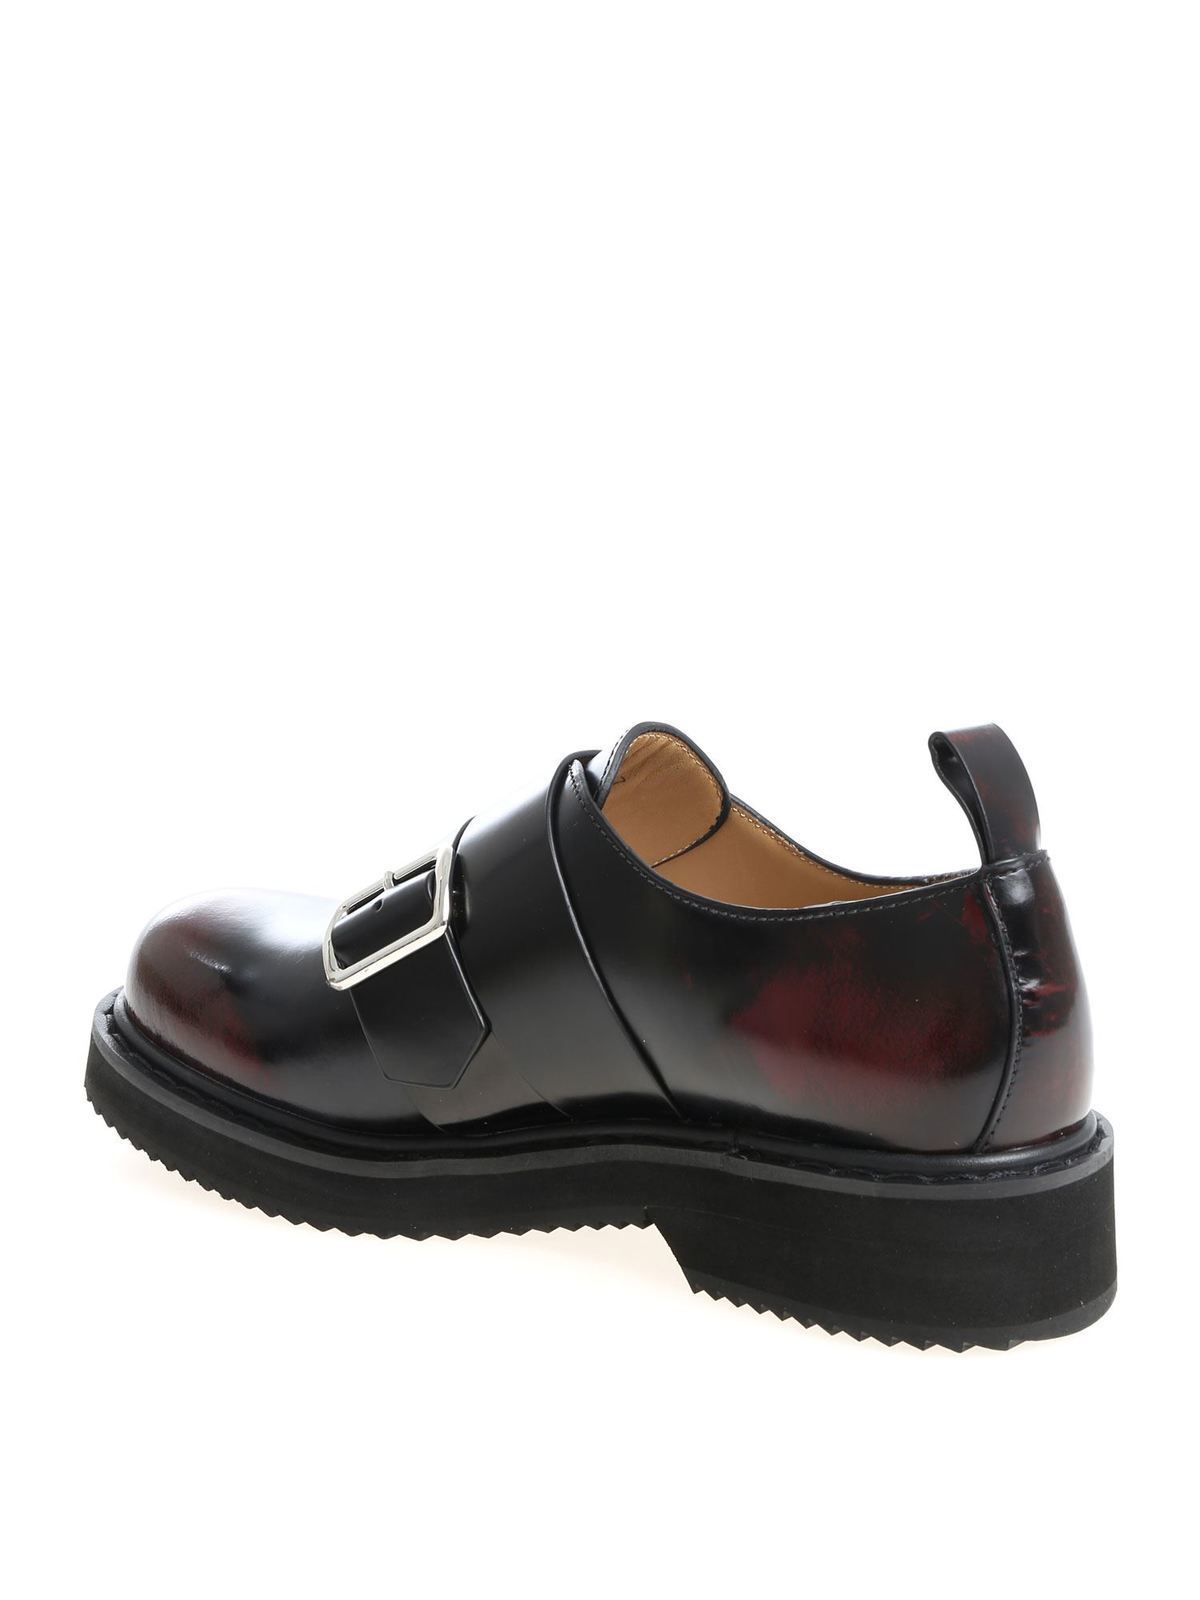 Wissen moeder isolatie Lace-ups shoes Jil Sander Navy - Black shoes with straps - JN31060A374